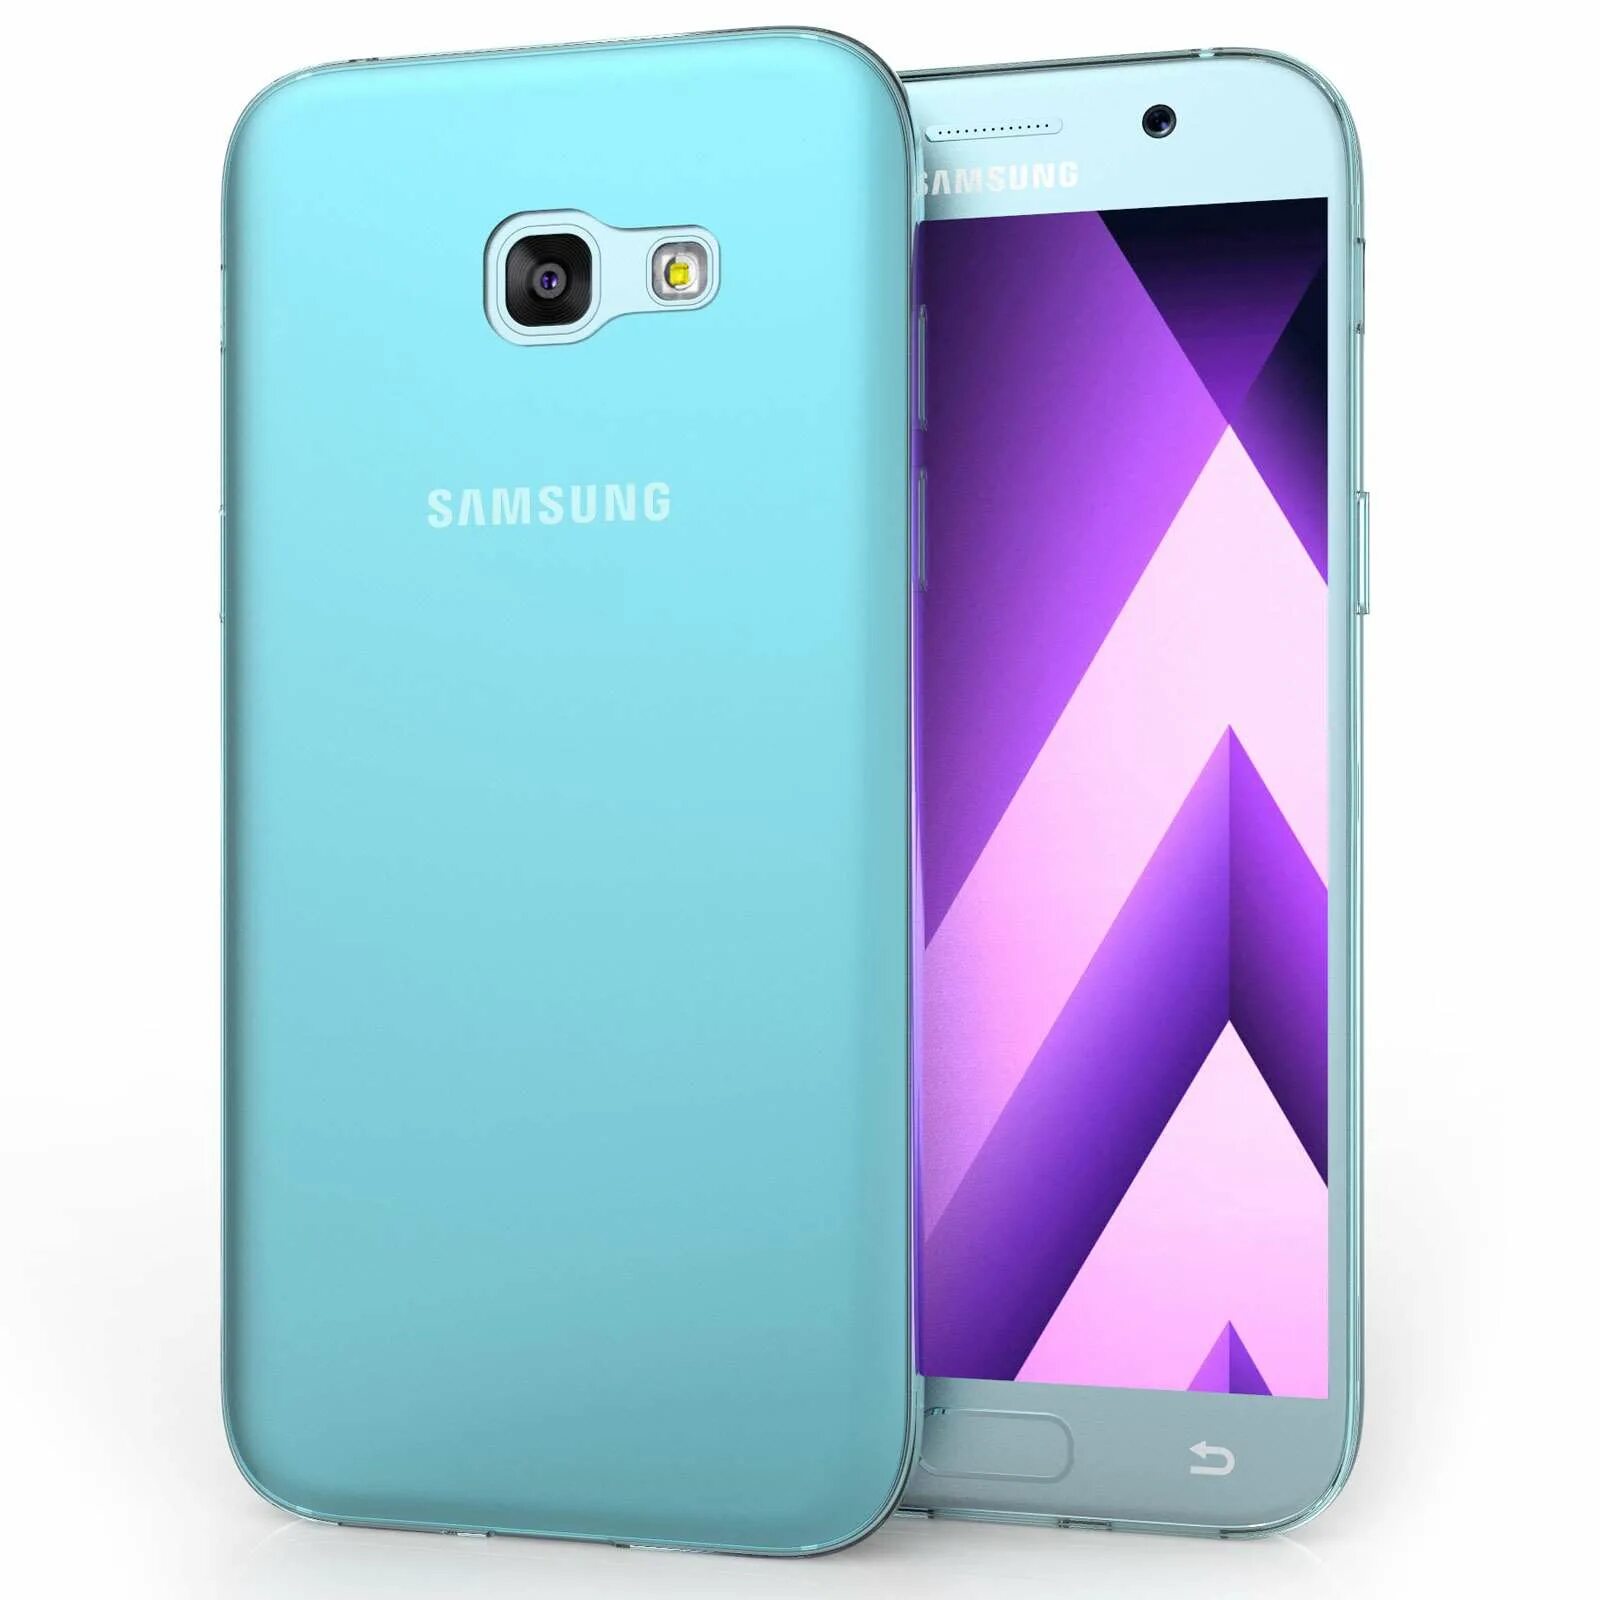 А5 2017 samsung. Samsung Galaxy a5 2017. Samsung Galaxy a5 2017 a520. Samsung Galaxy a5 2017 Blue. Самсунг галакси а5 2017 голубой.